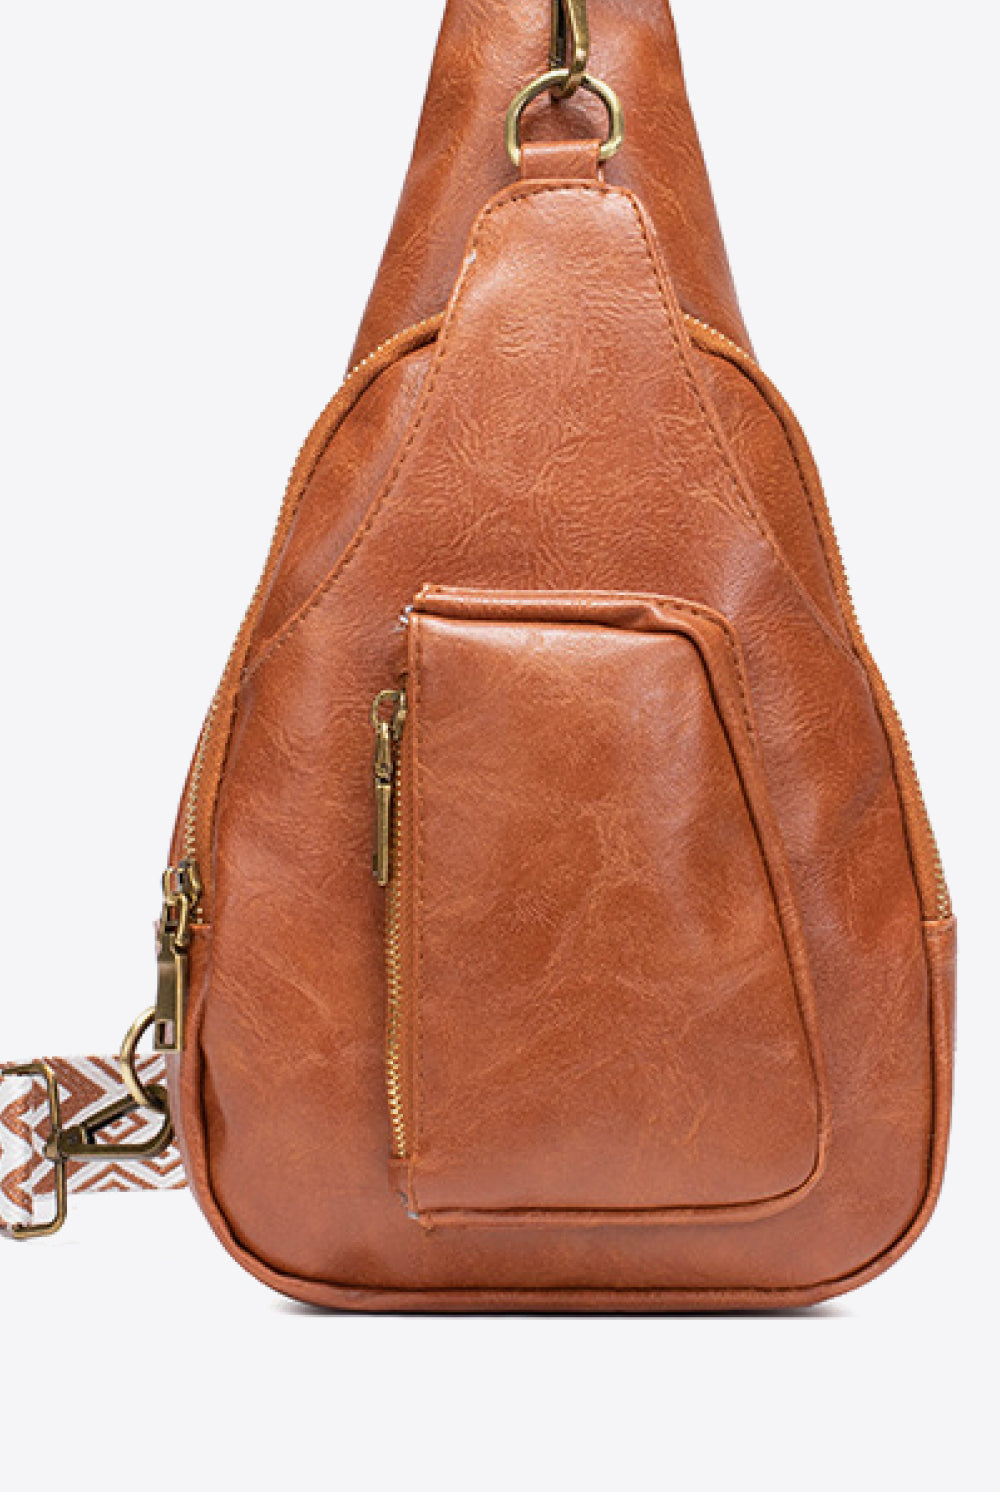 Sienna All The Feels PU Leather Sling Bag Handbags